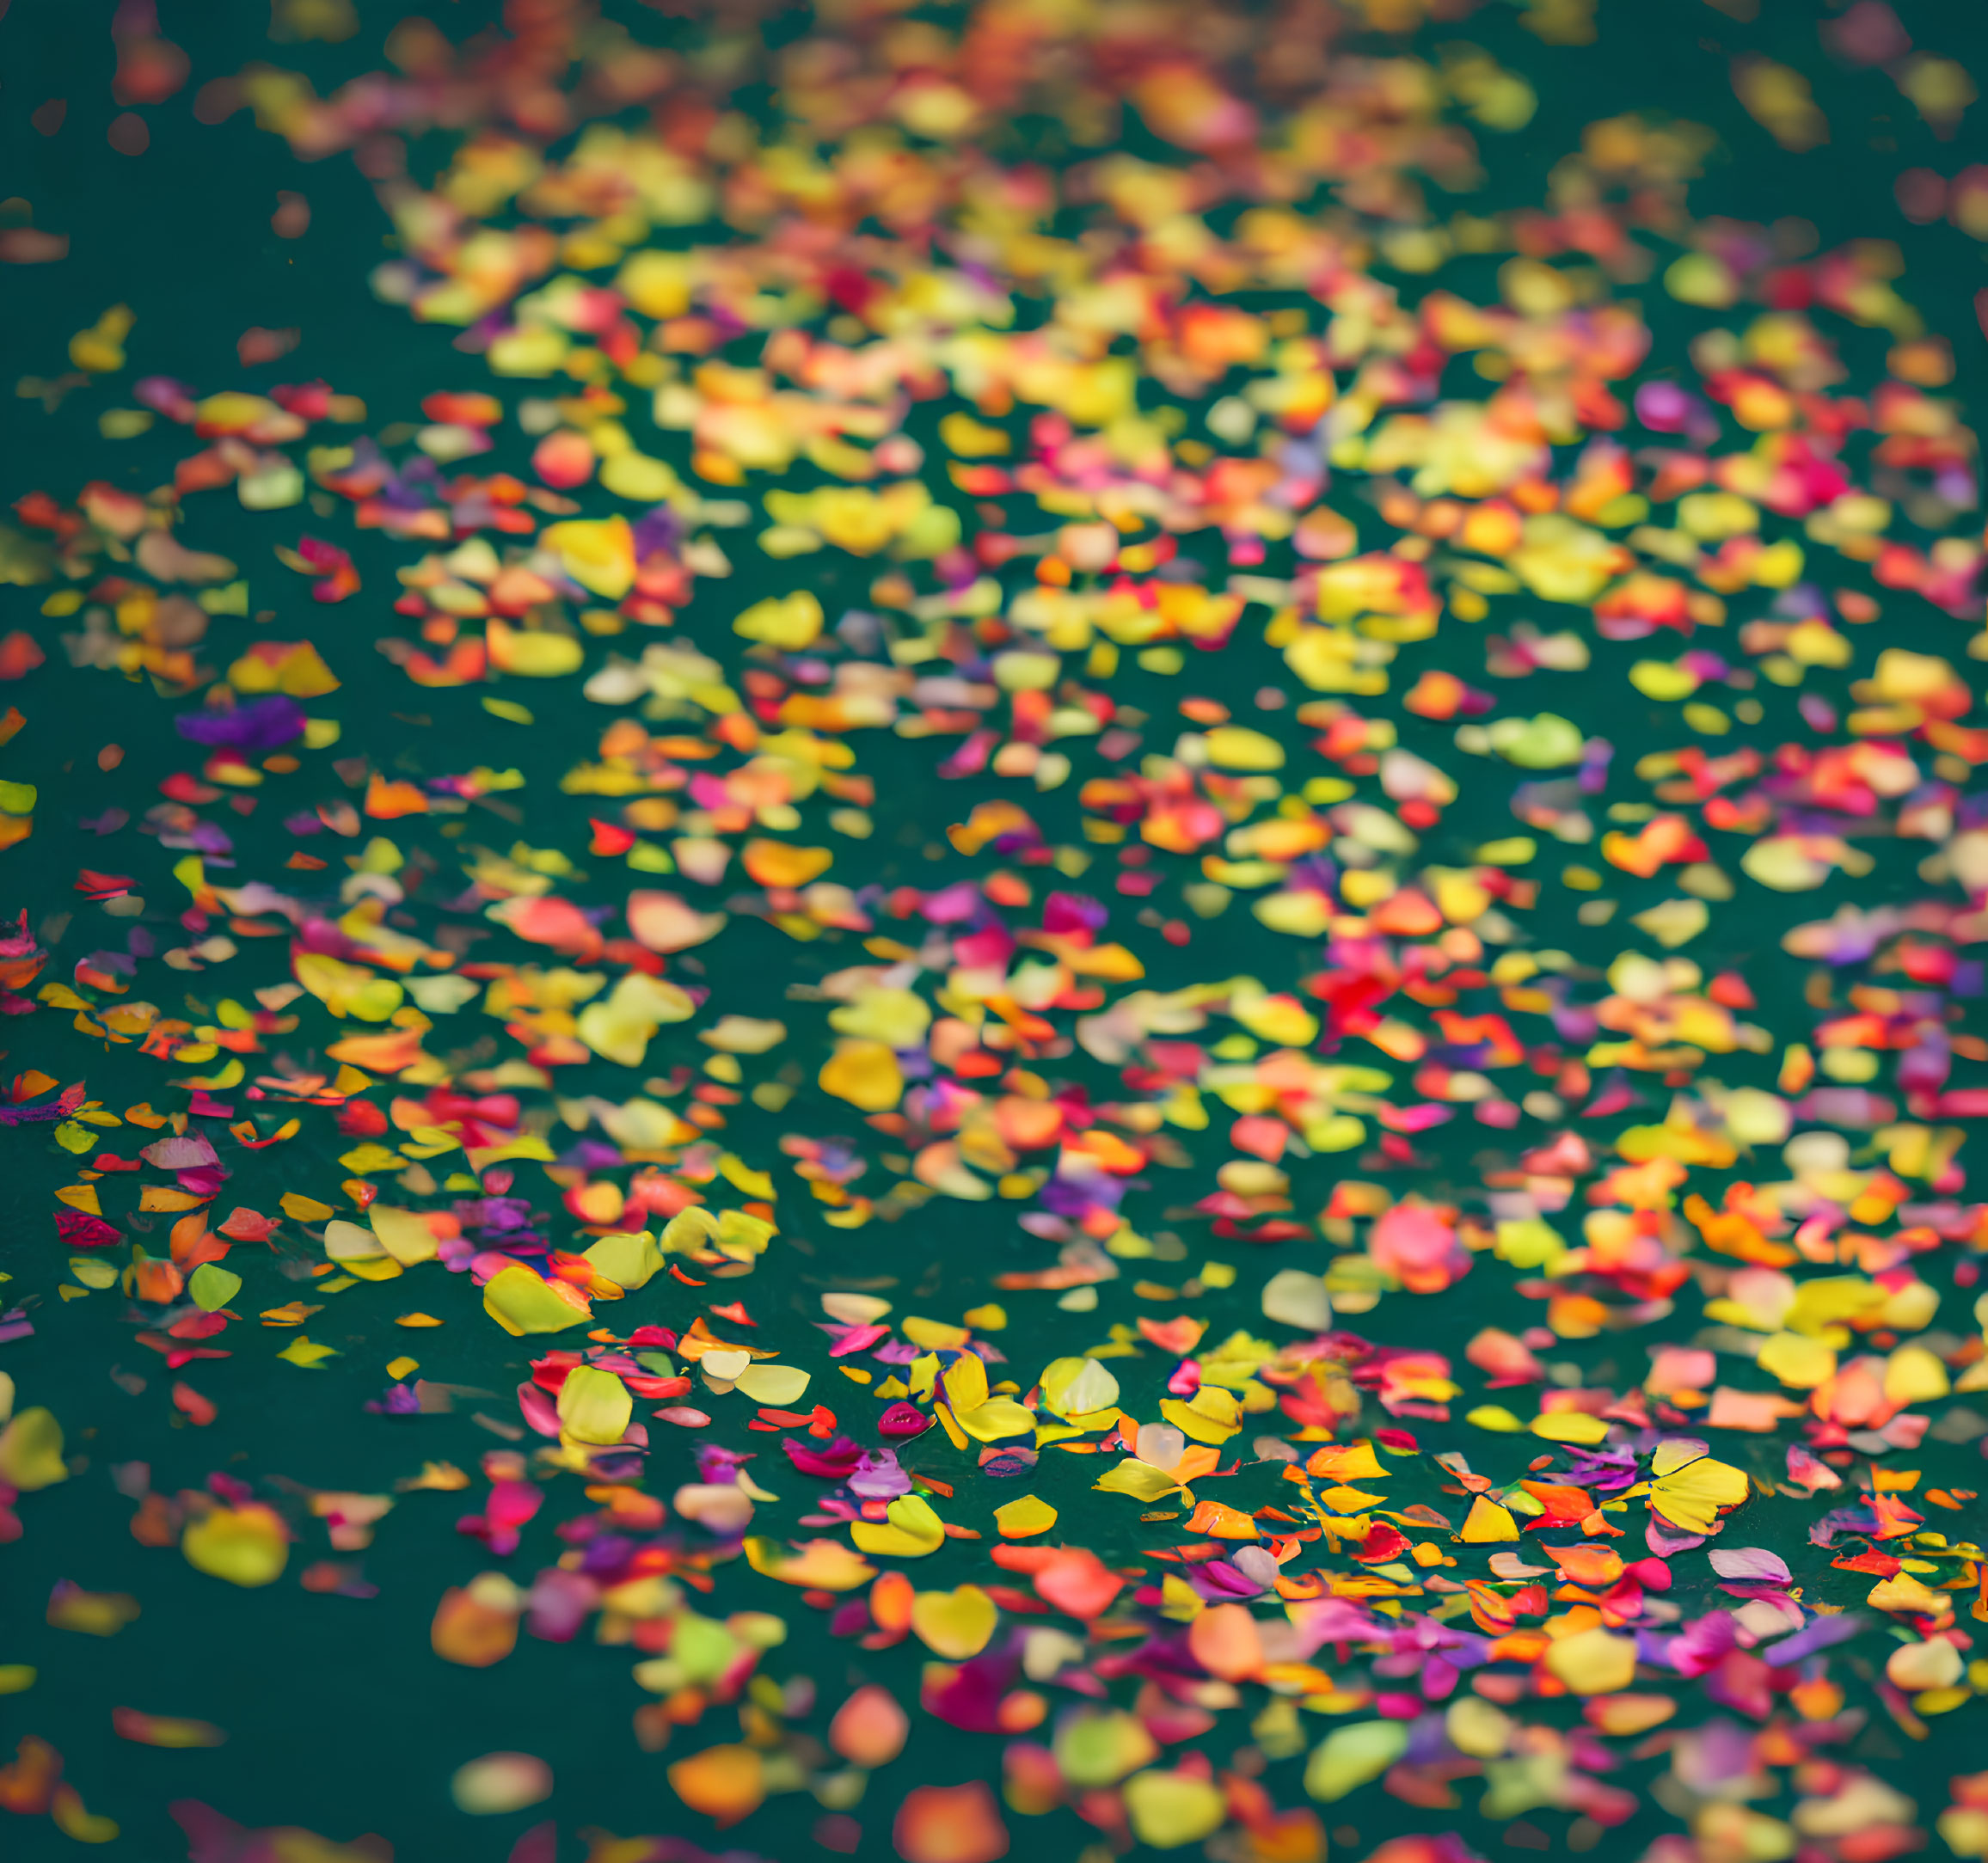 Colorful confetti on dark water surface creates festive pattern